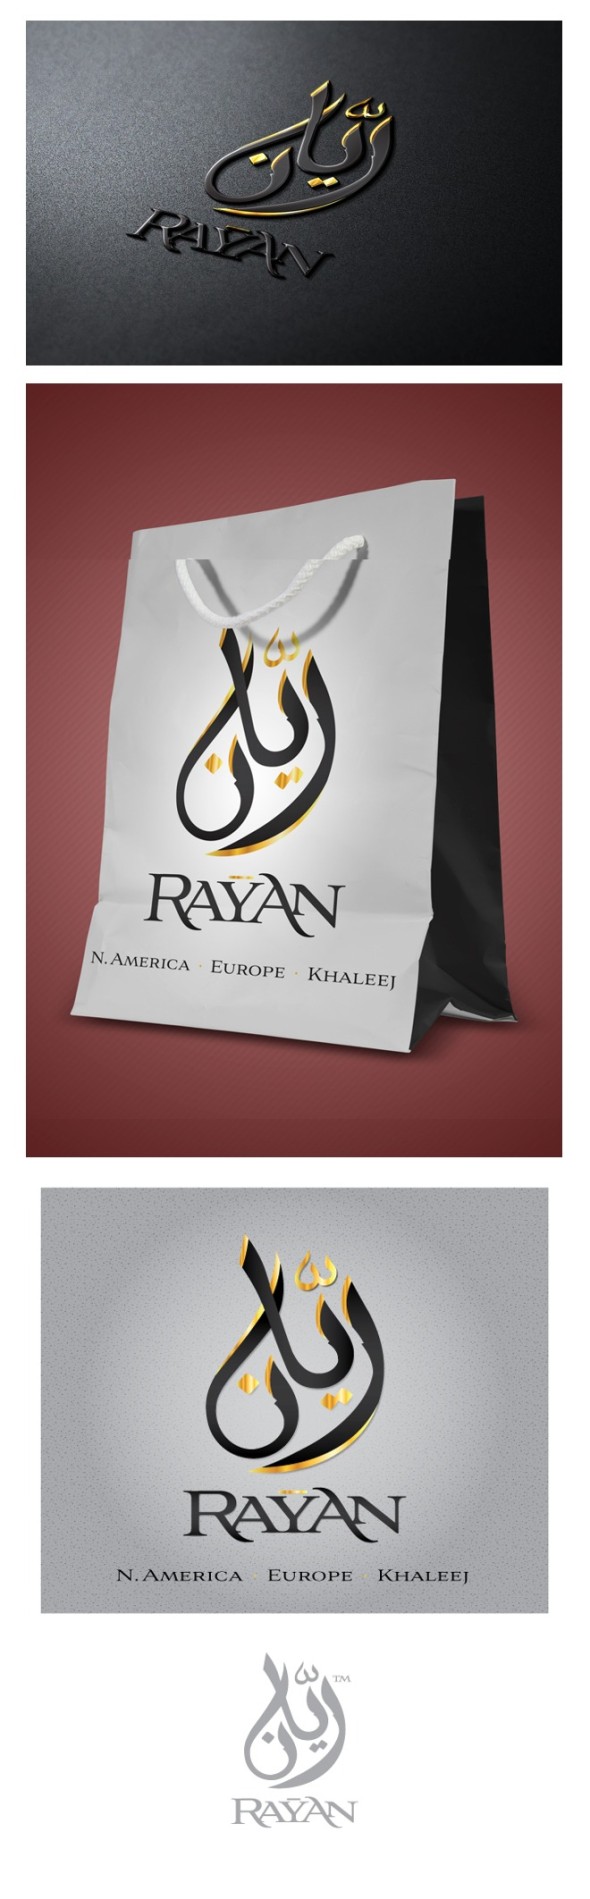 Rayan Arabic randing